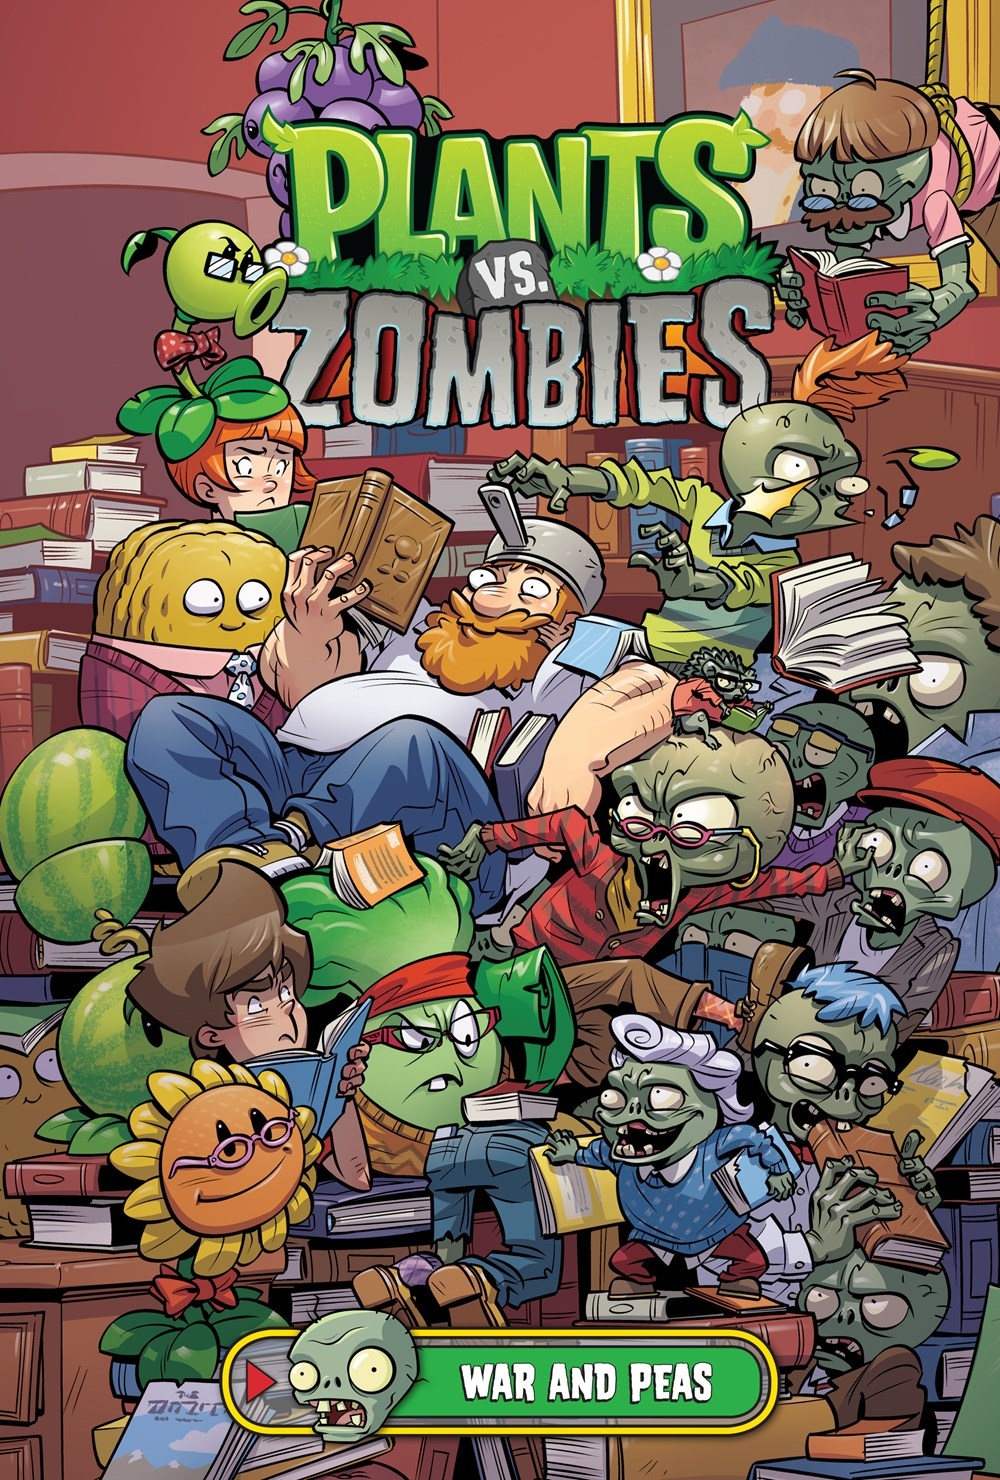 Plants vs. Zombies Volume 8: Lawn of Doom : Tobin, Paul, Chan, Ron